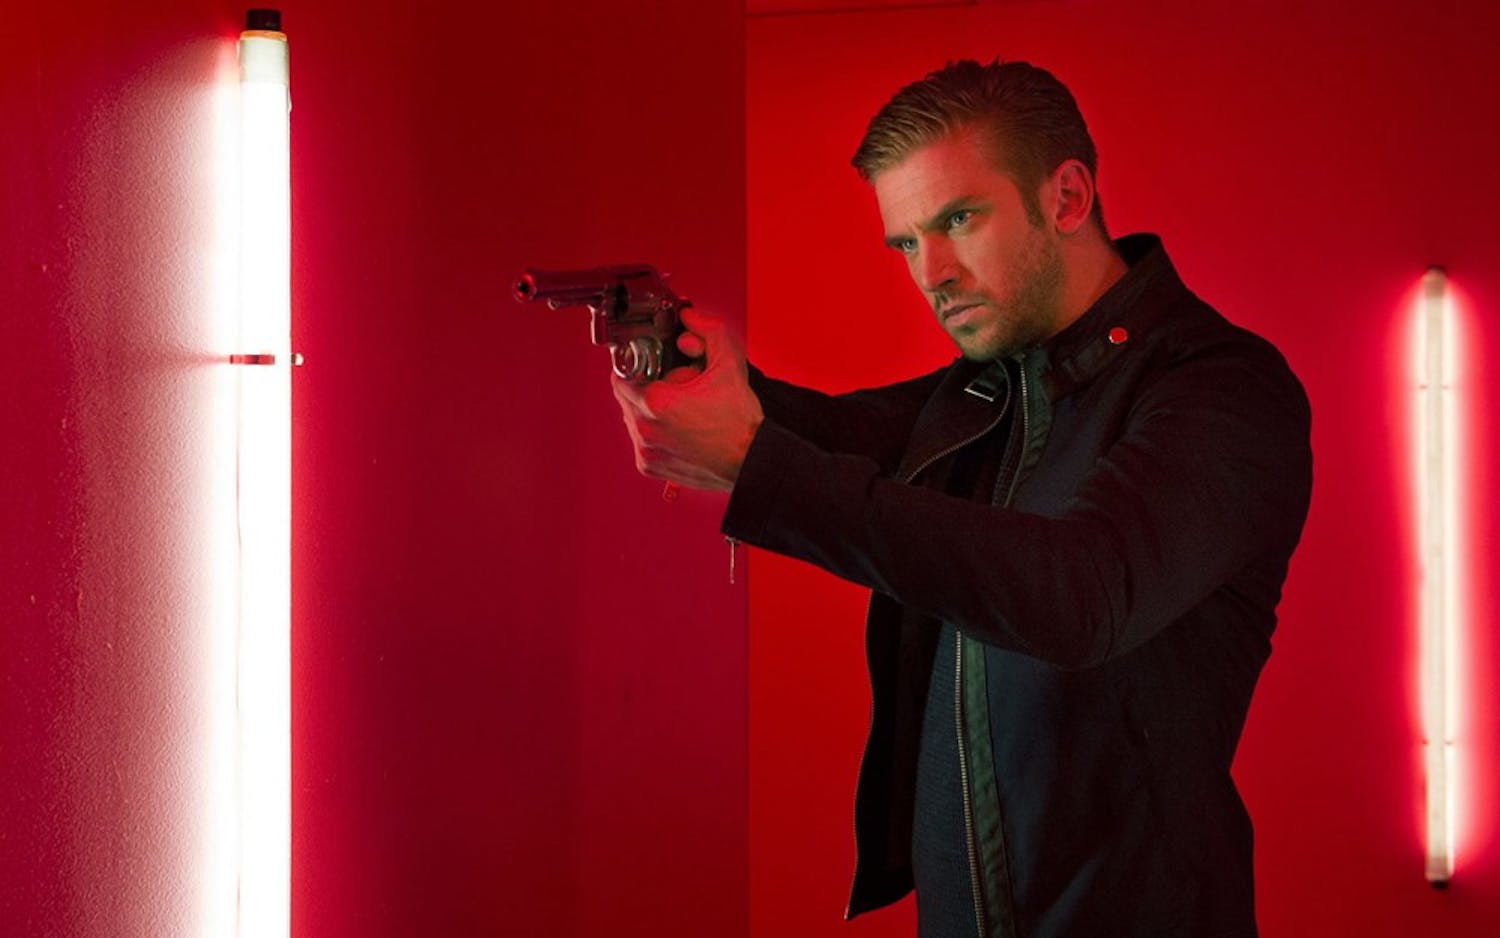 DAN STEVENS stars in the action thriller THE GUEST, opening in September.